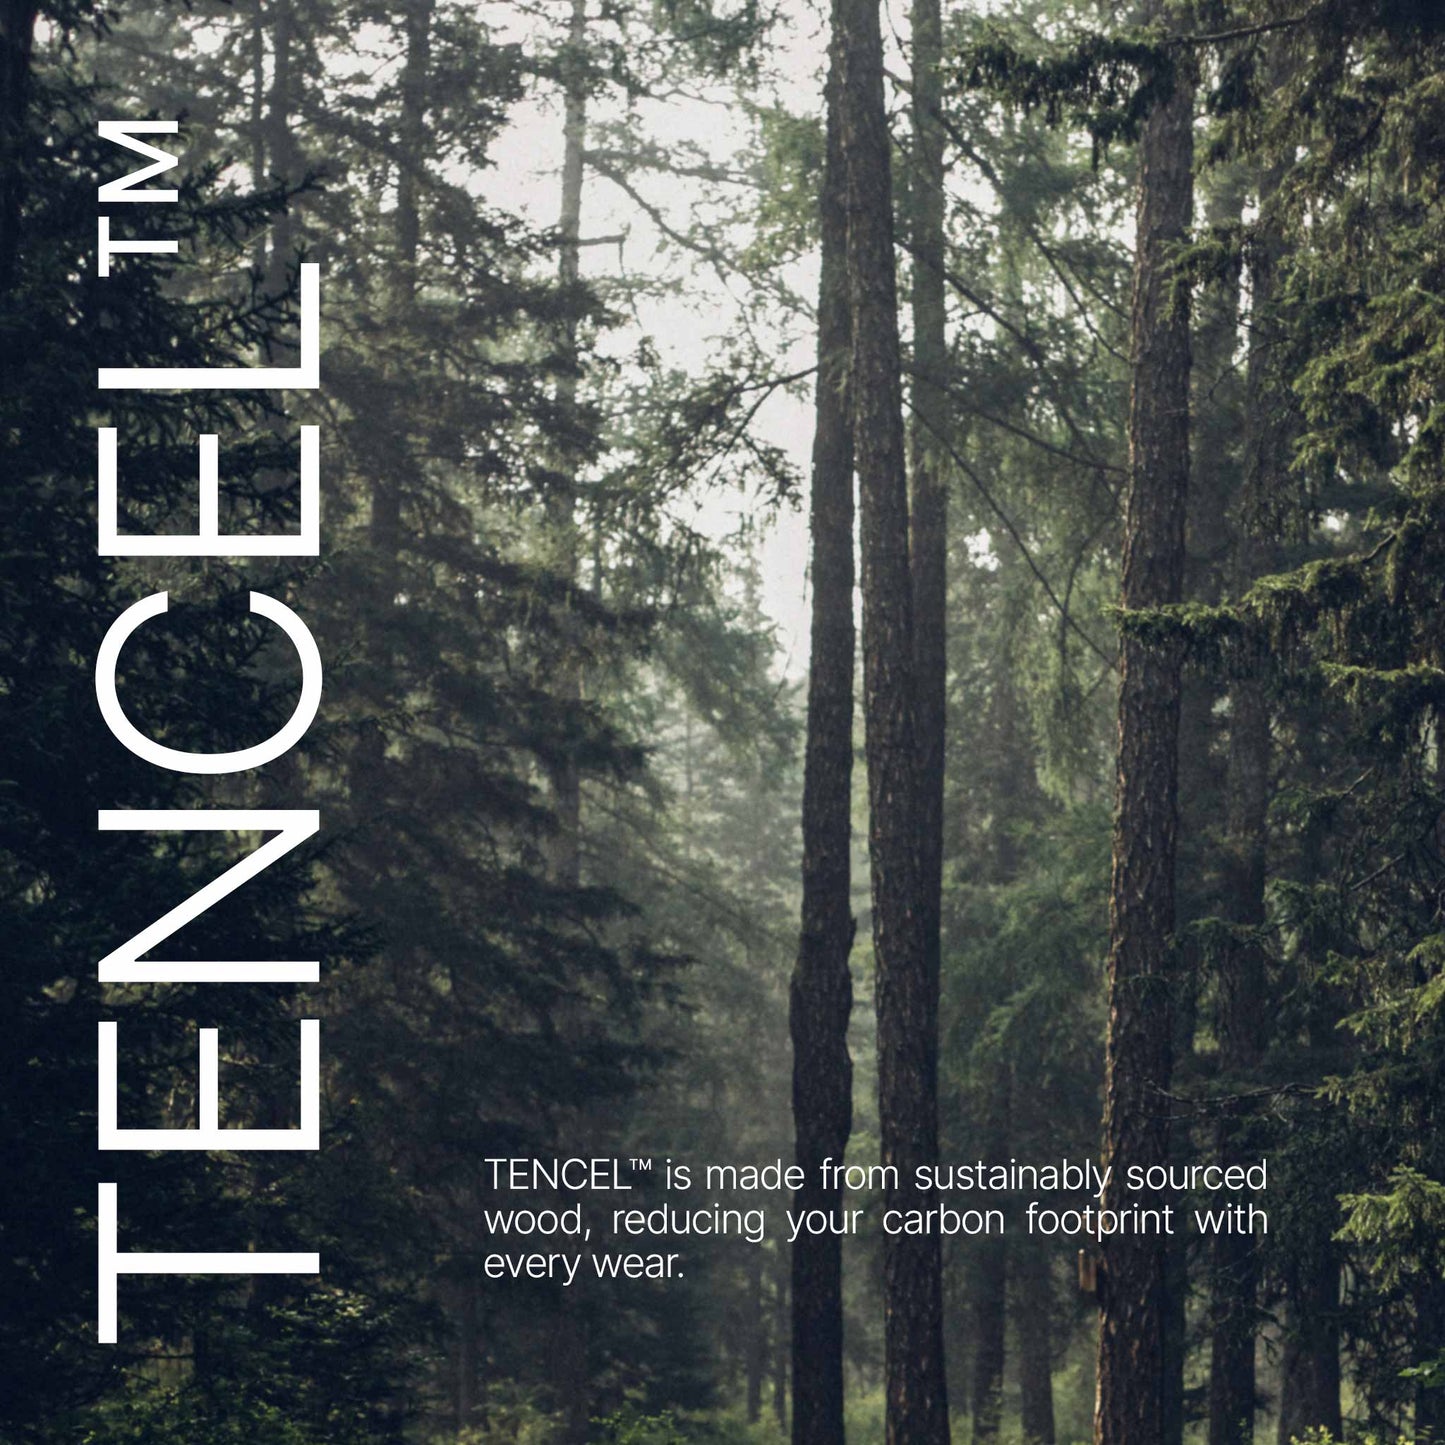 Women’s TENCEL™ Lyocell Thong Underwear I 2-Pack, Charcoal